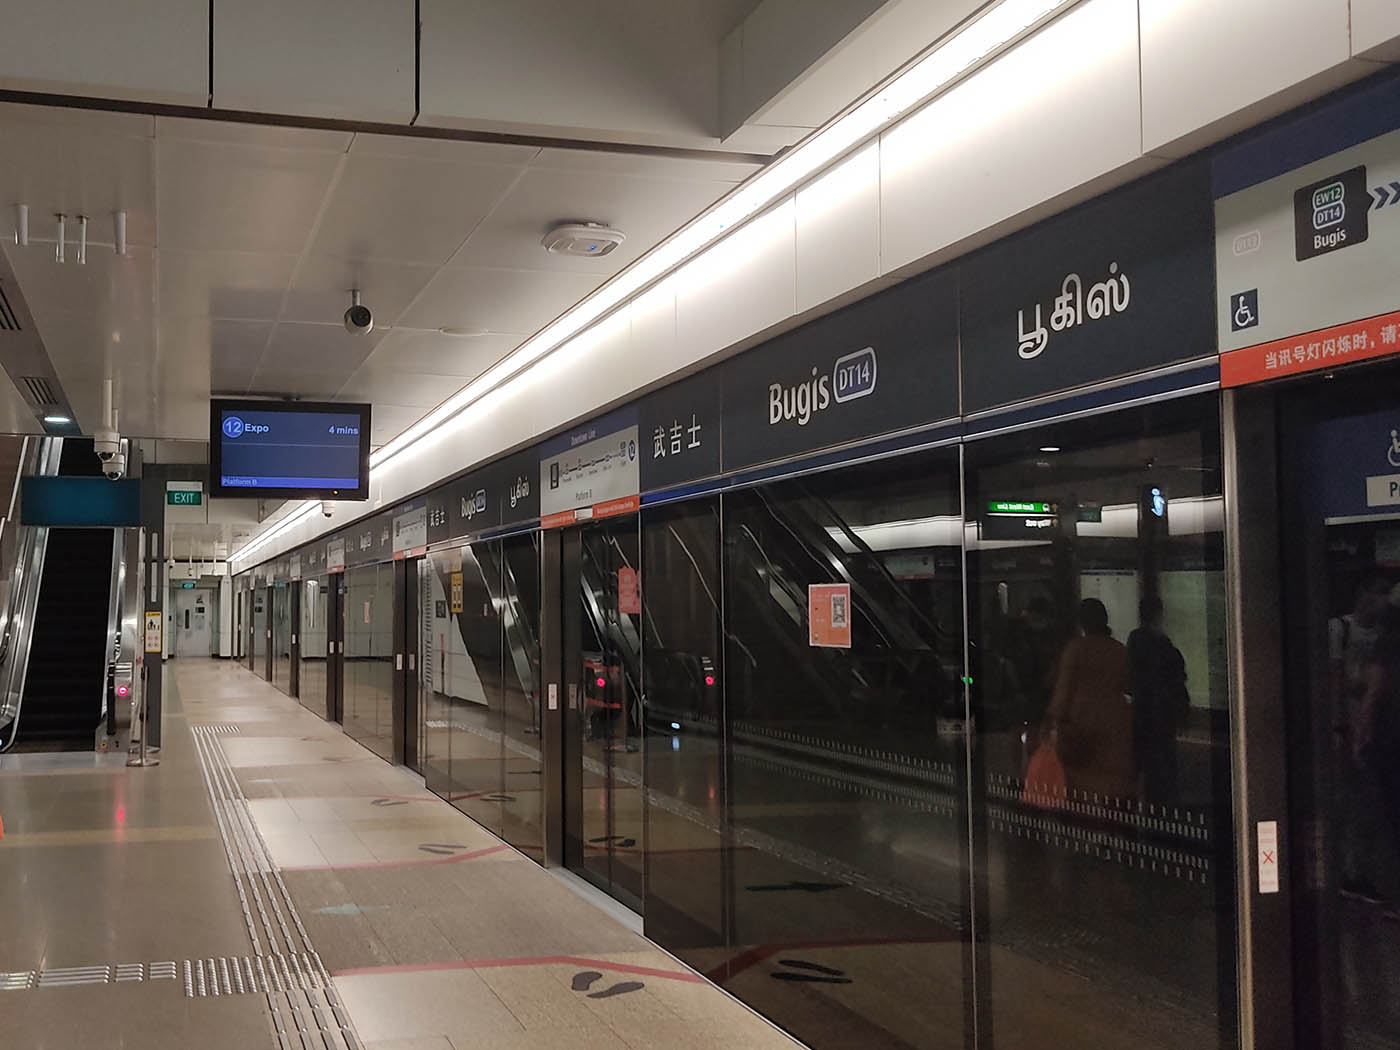 Bugis MRT Station - - DT14 Platform B